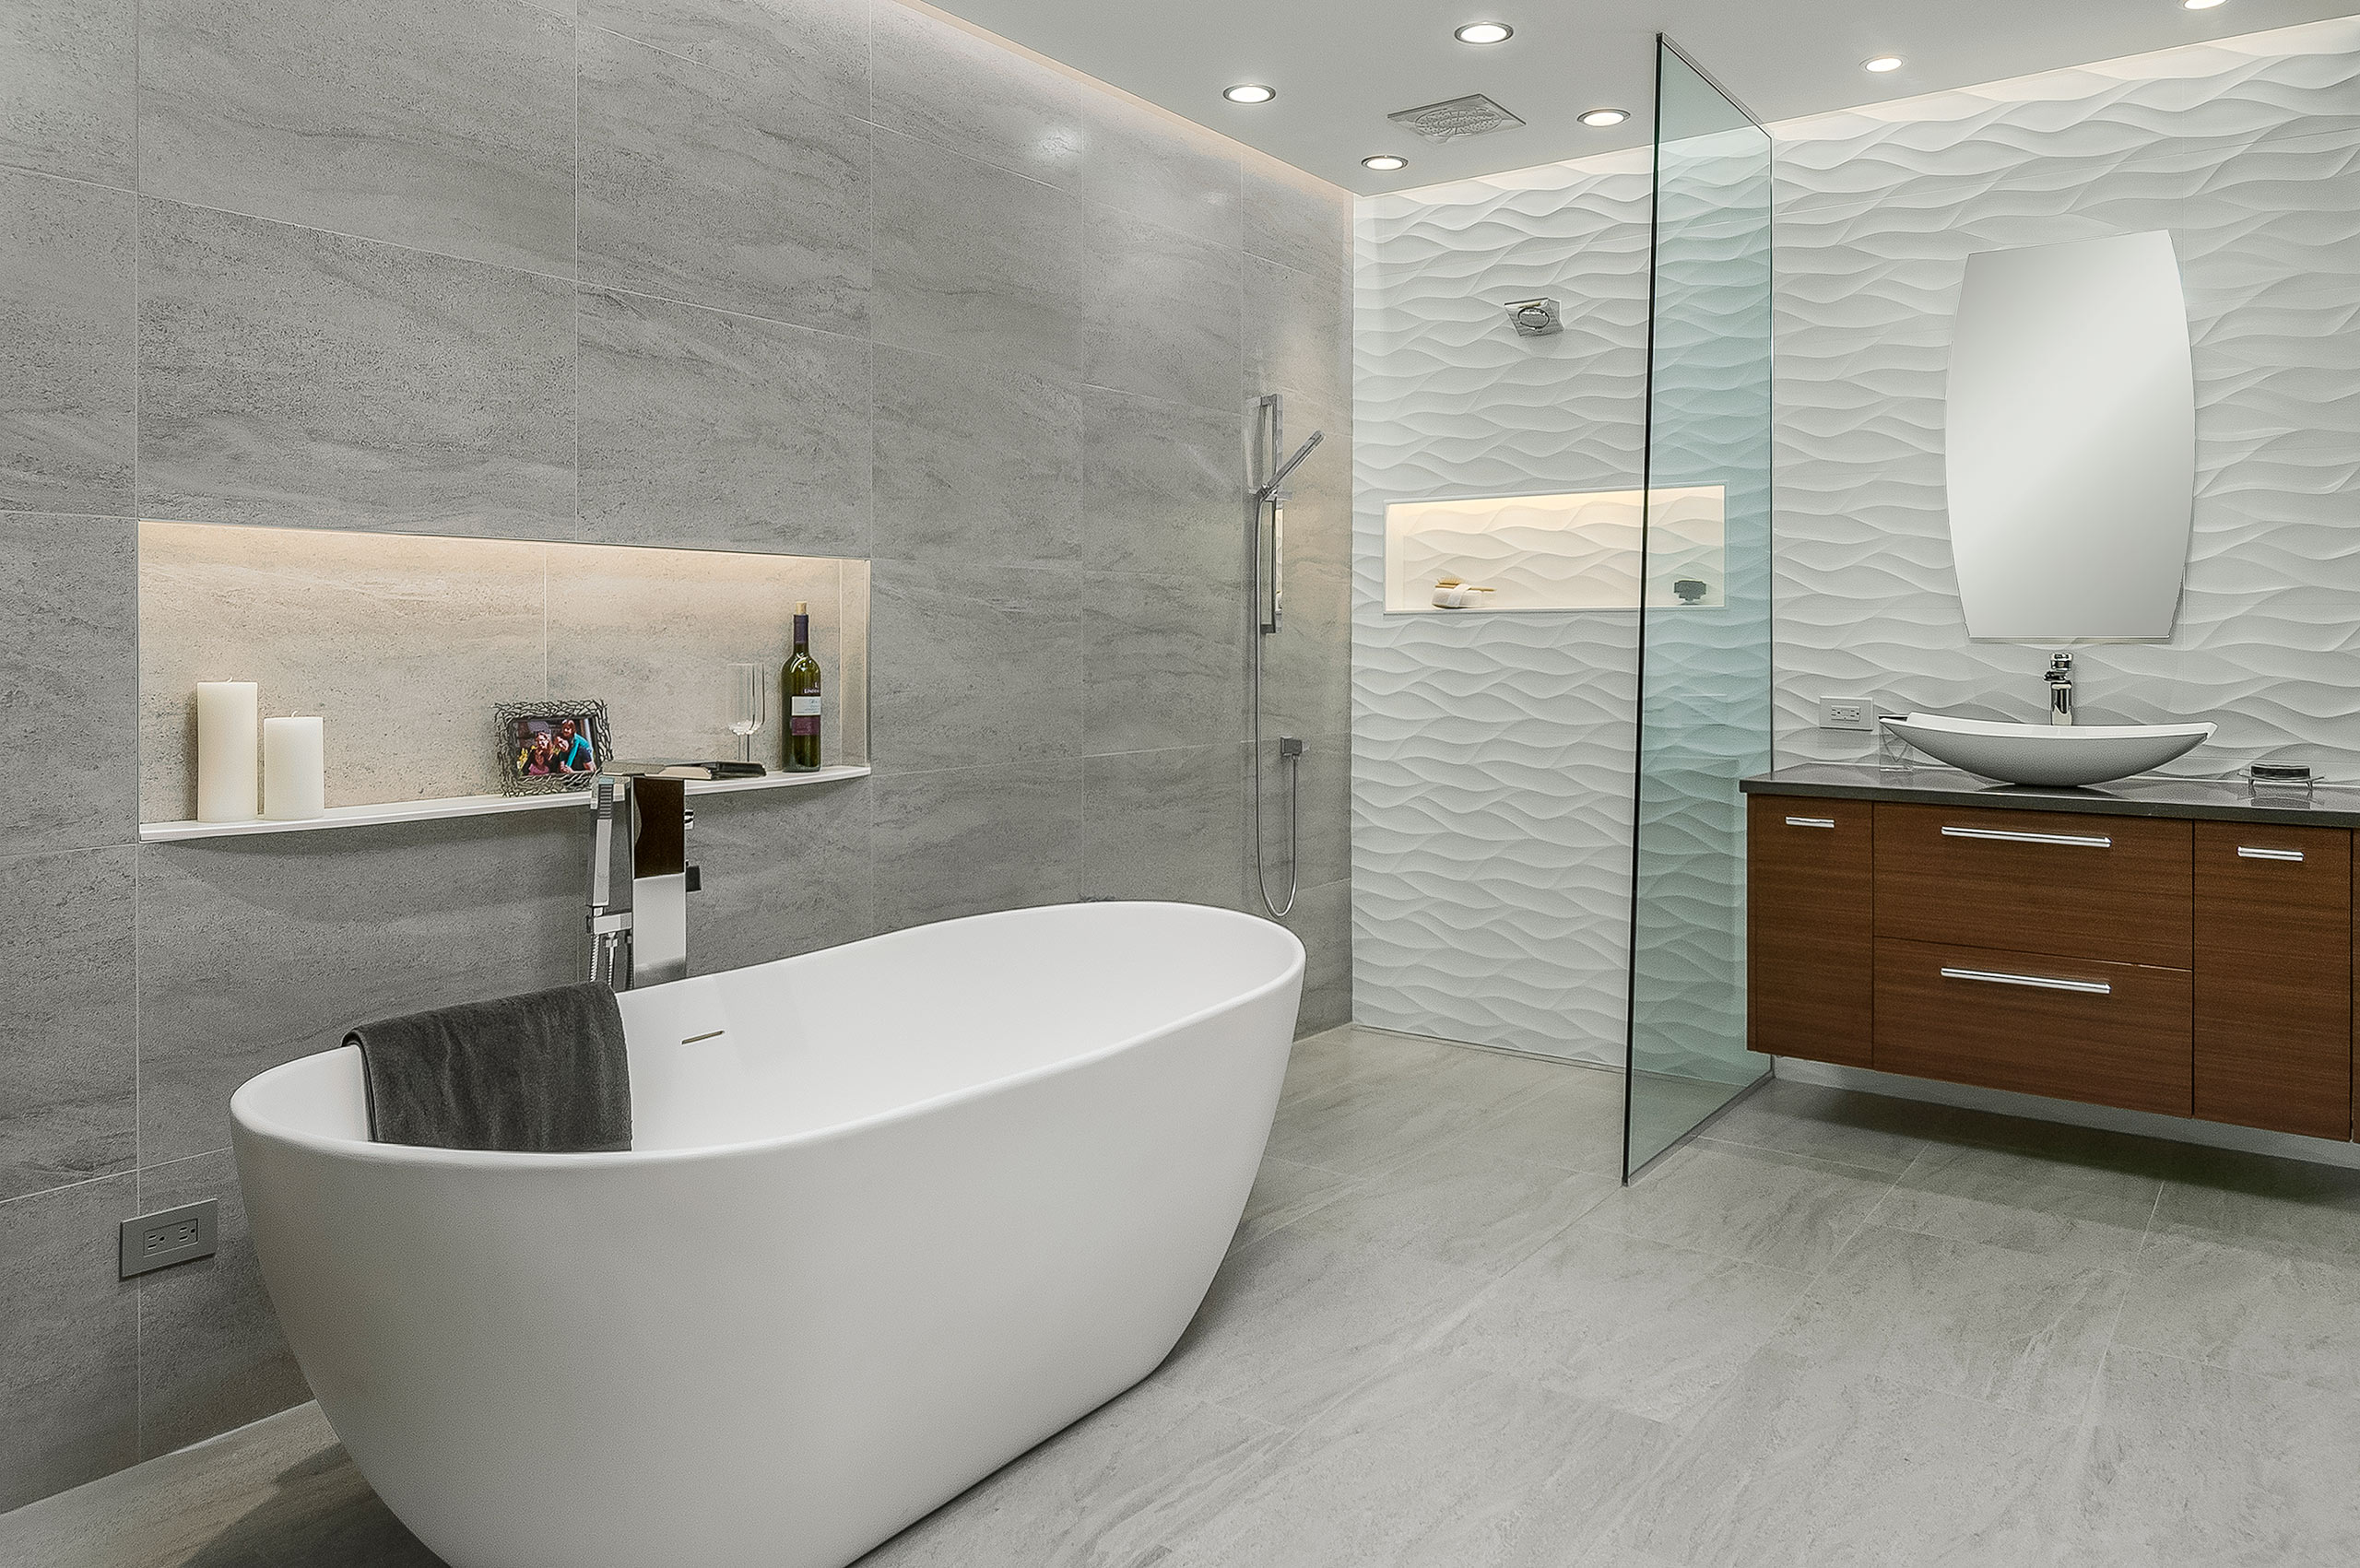 Upscale, modern, minimal gray and white bathroom.